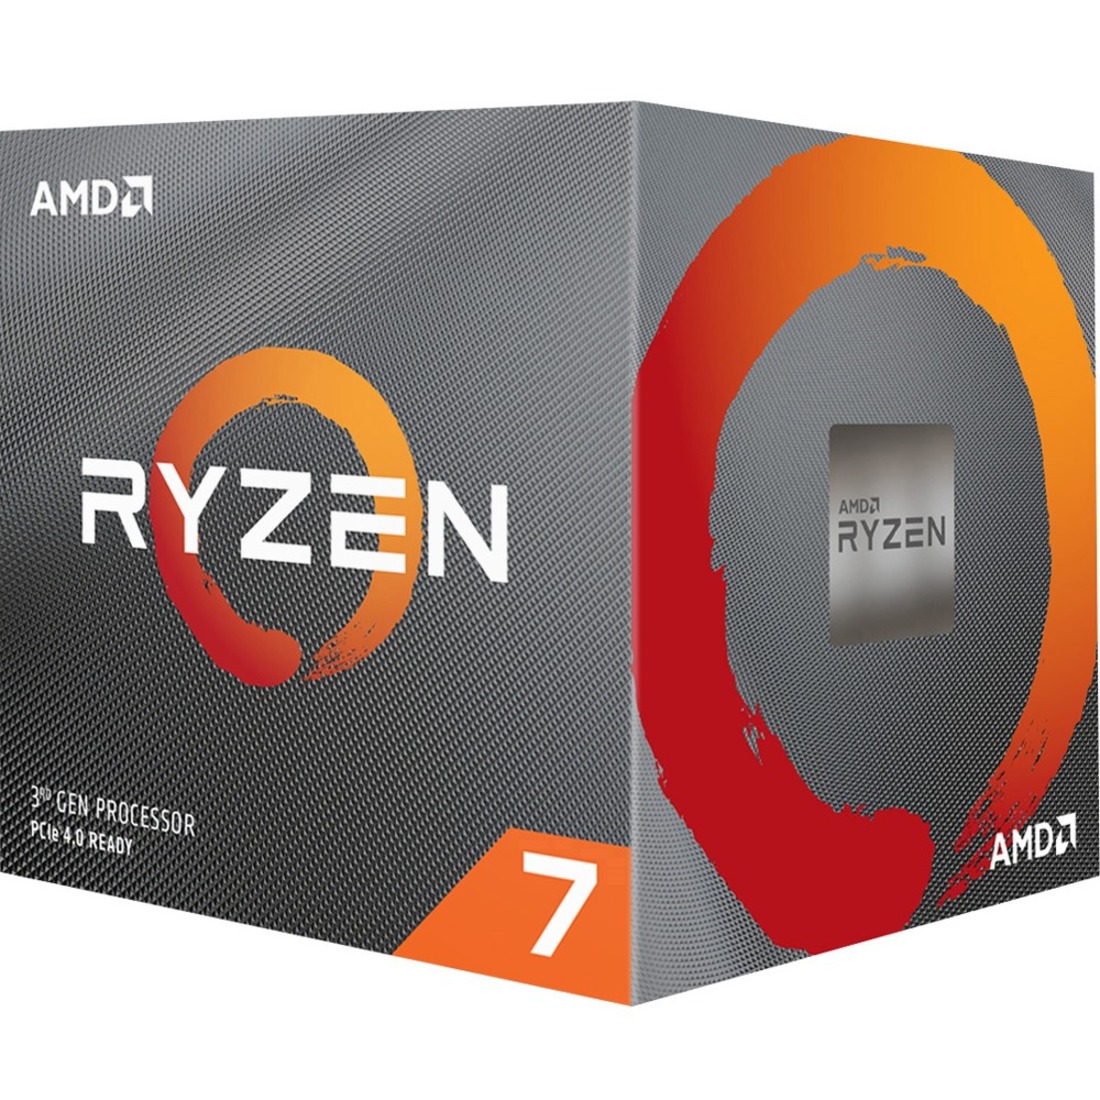 AMD Ryzen 7 3700X Octa-core (8 Core) 3.60 GHz Processor - Retail